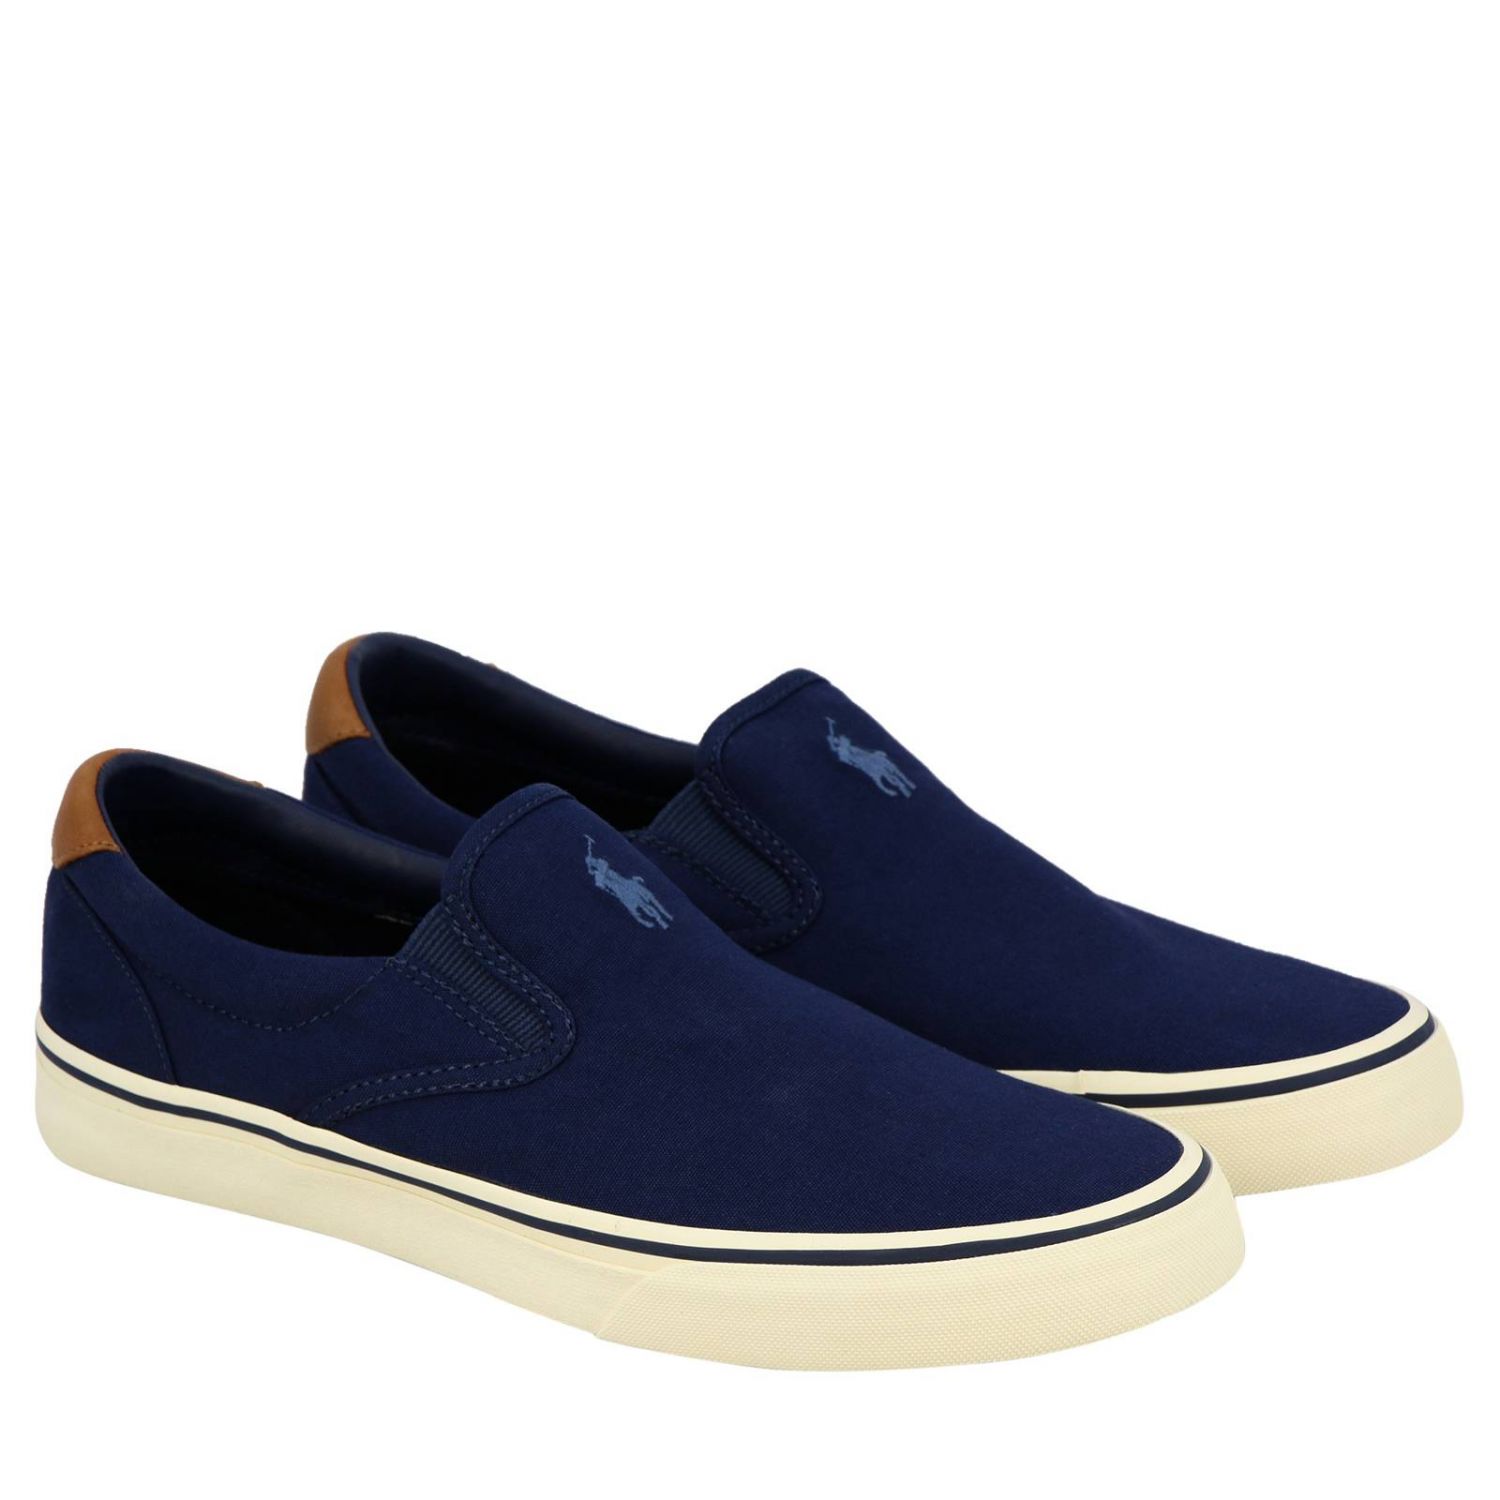 Polo Ralph Lauren Outlet: Shoes men - Navy | Sneakers Polo Ralph Lauren ...